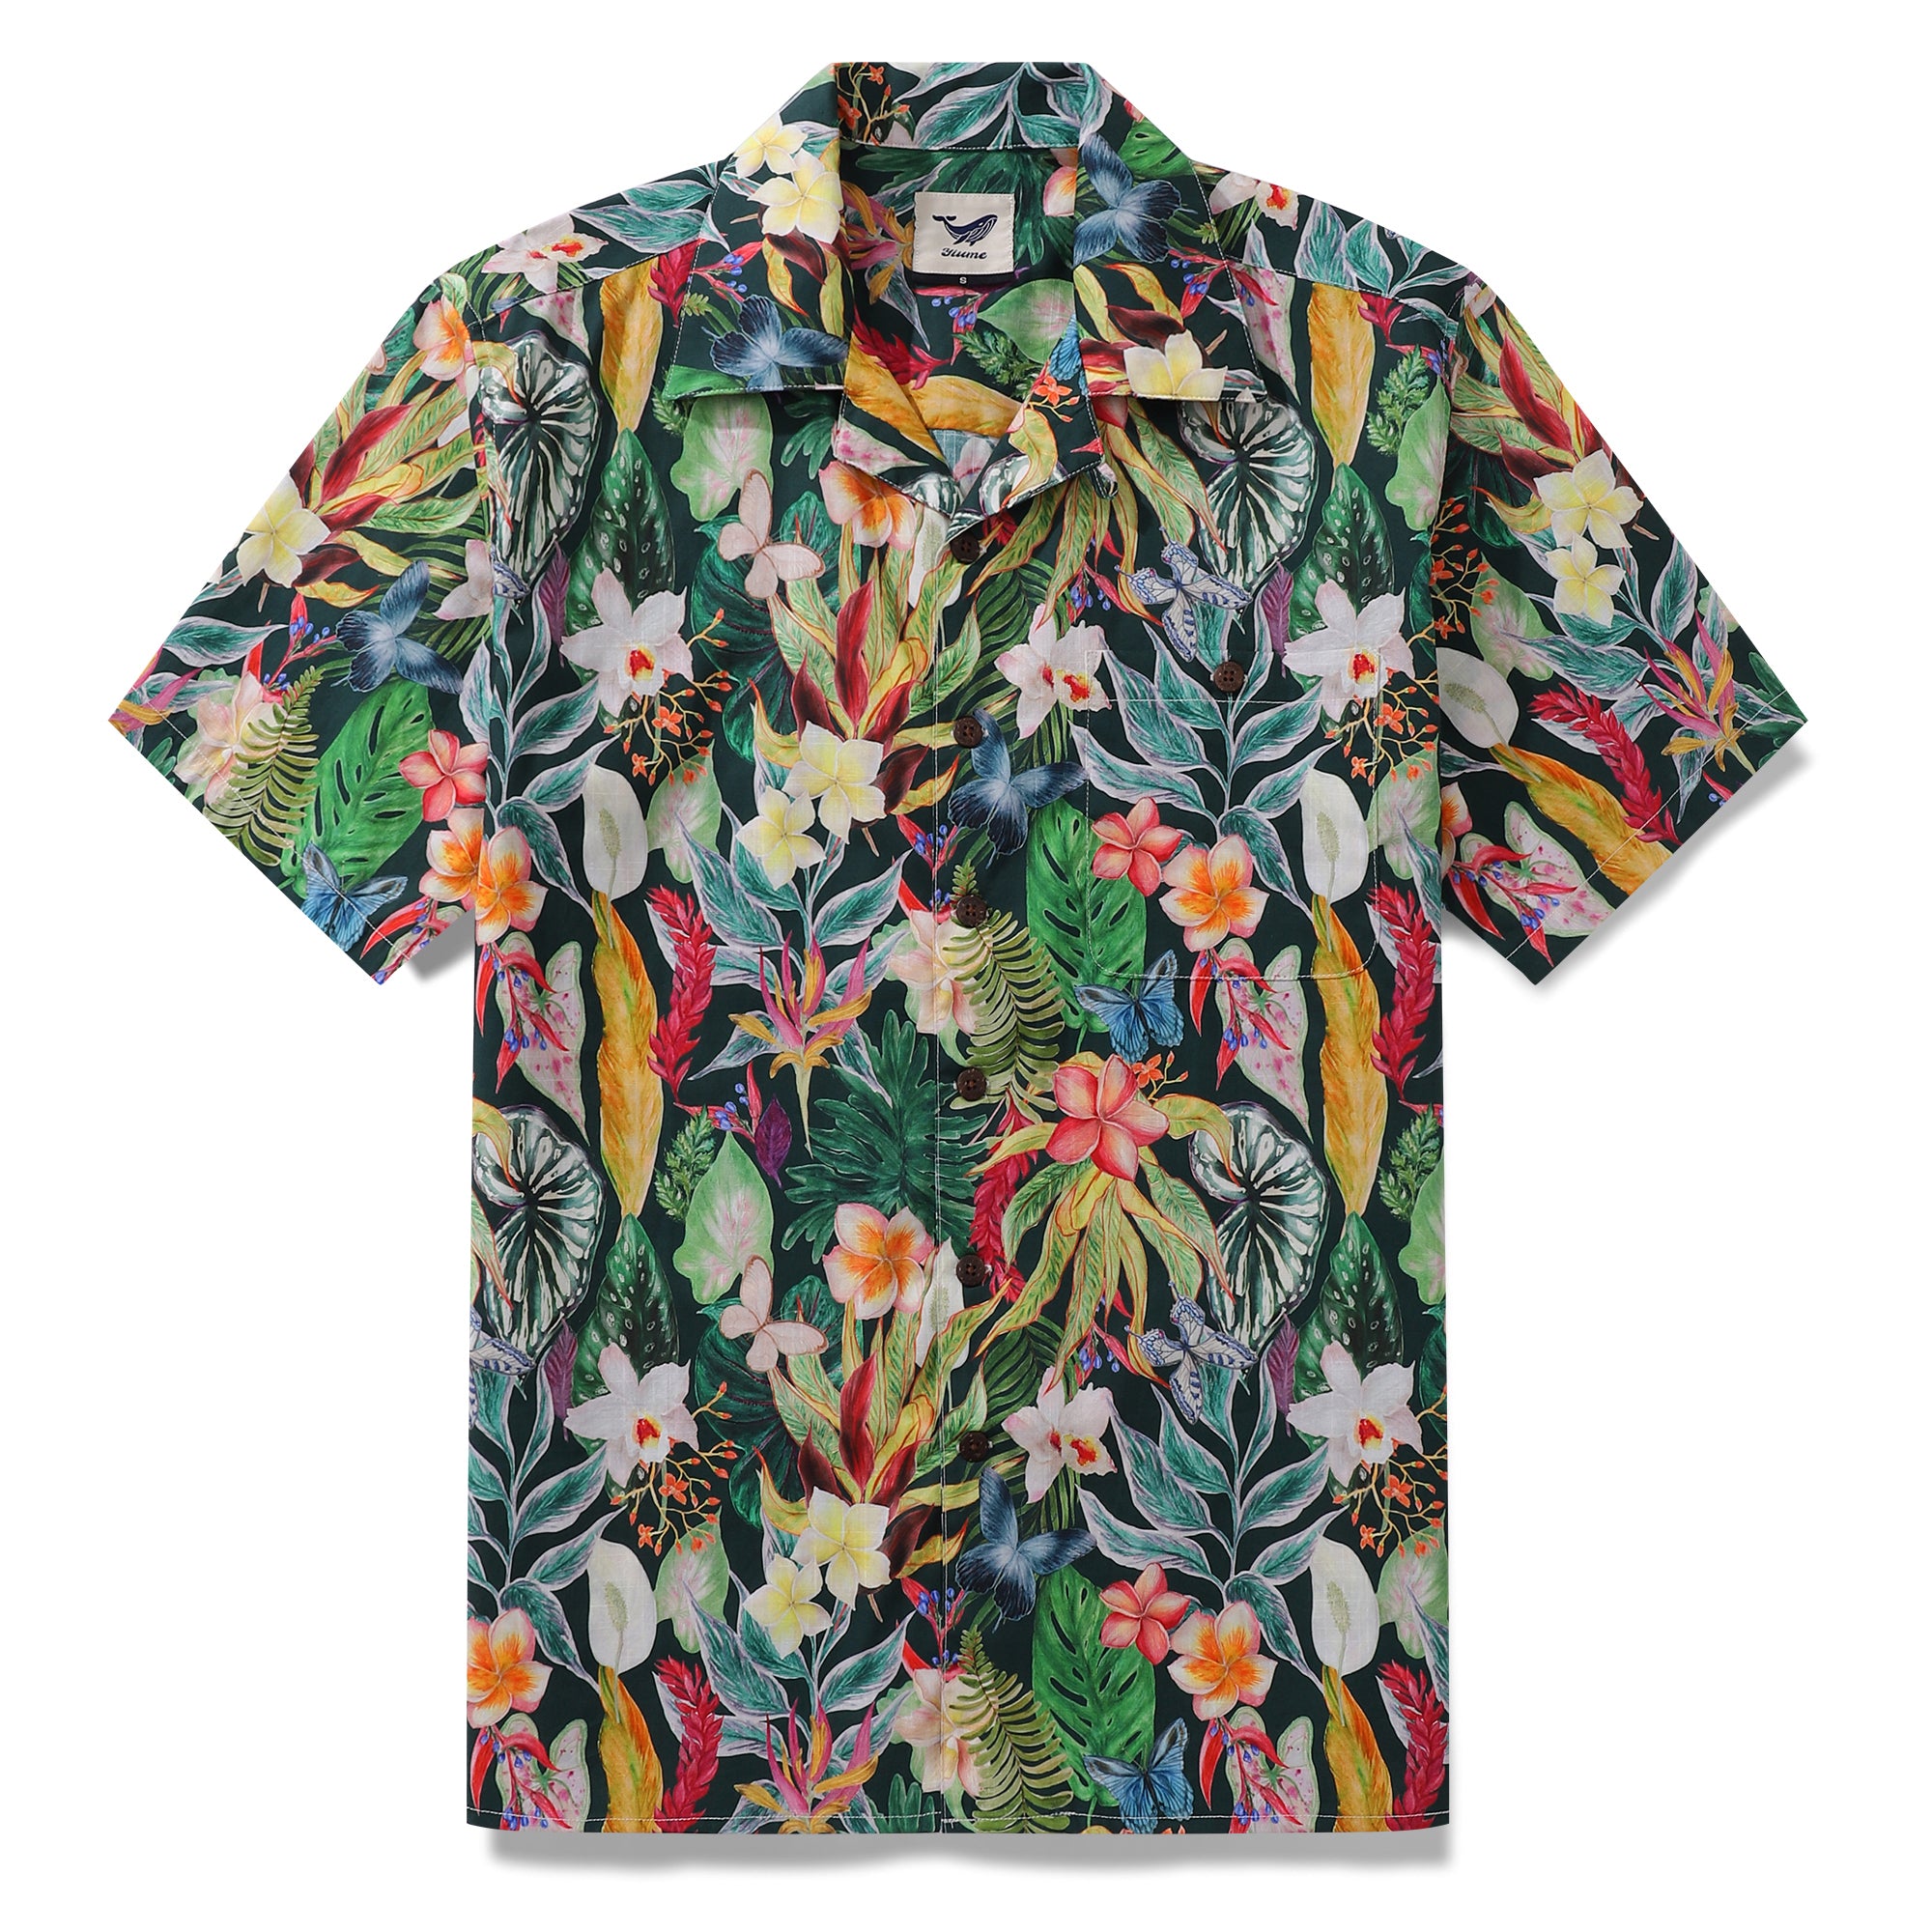 Hawaiian Tropical Shirt For Men Floral Butterfly Fantasy Shirt Camp Collar 100% Cotton